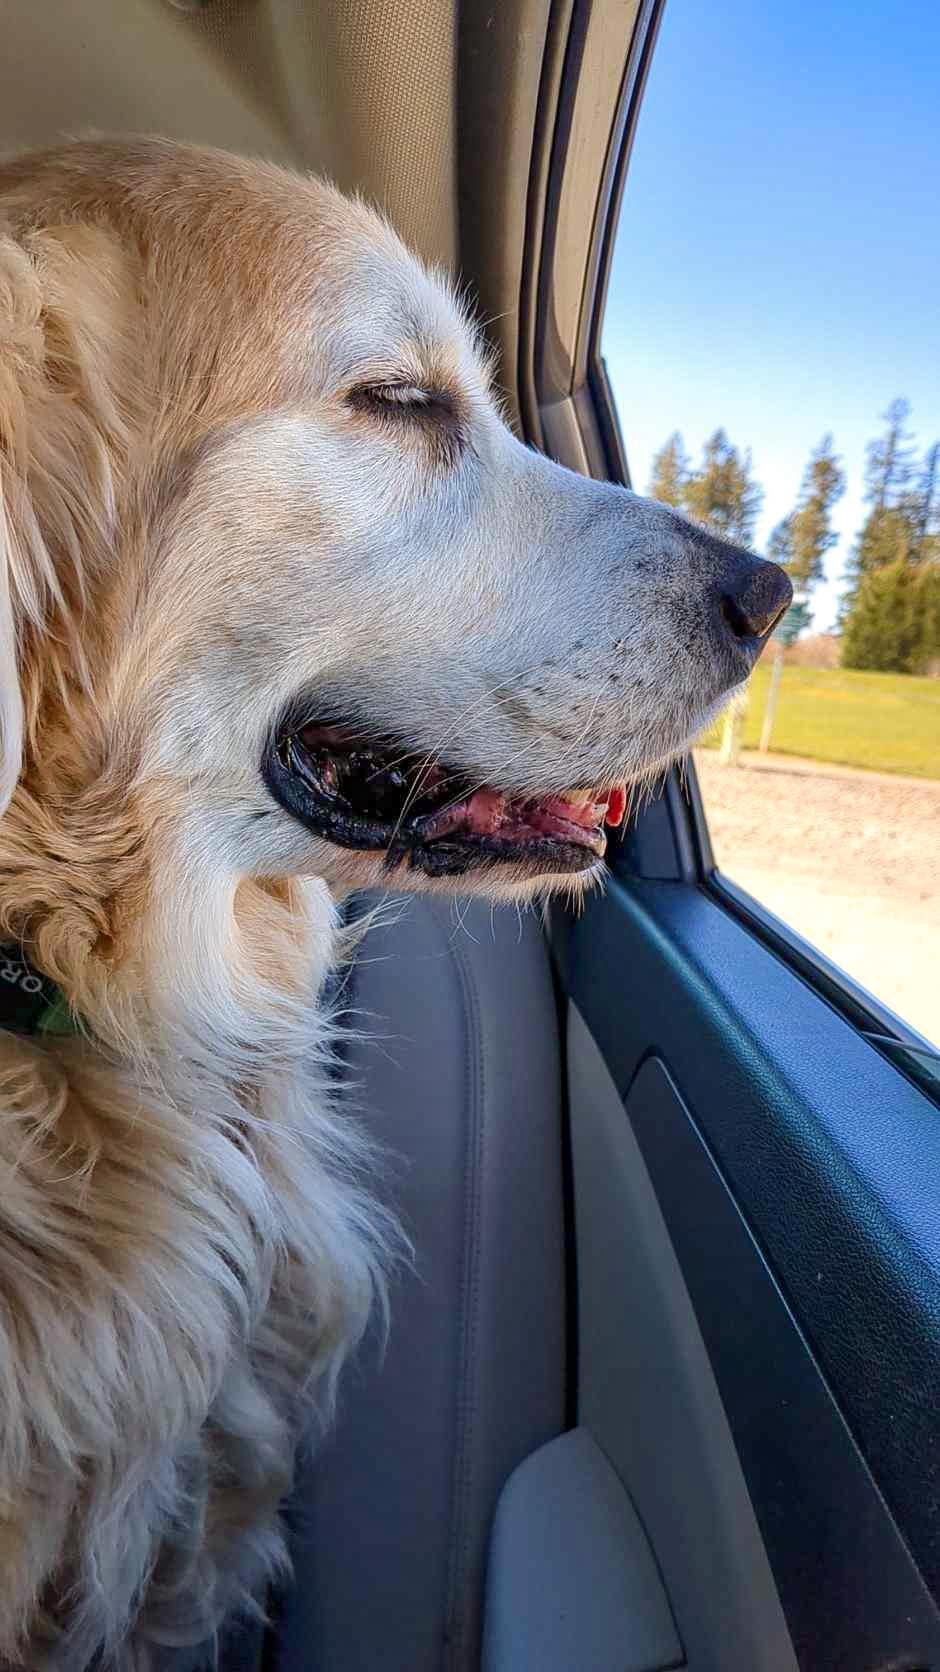 Cooper loves car rides